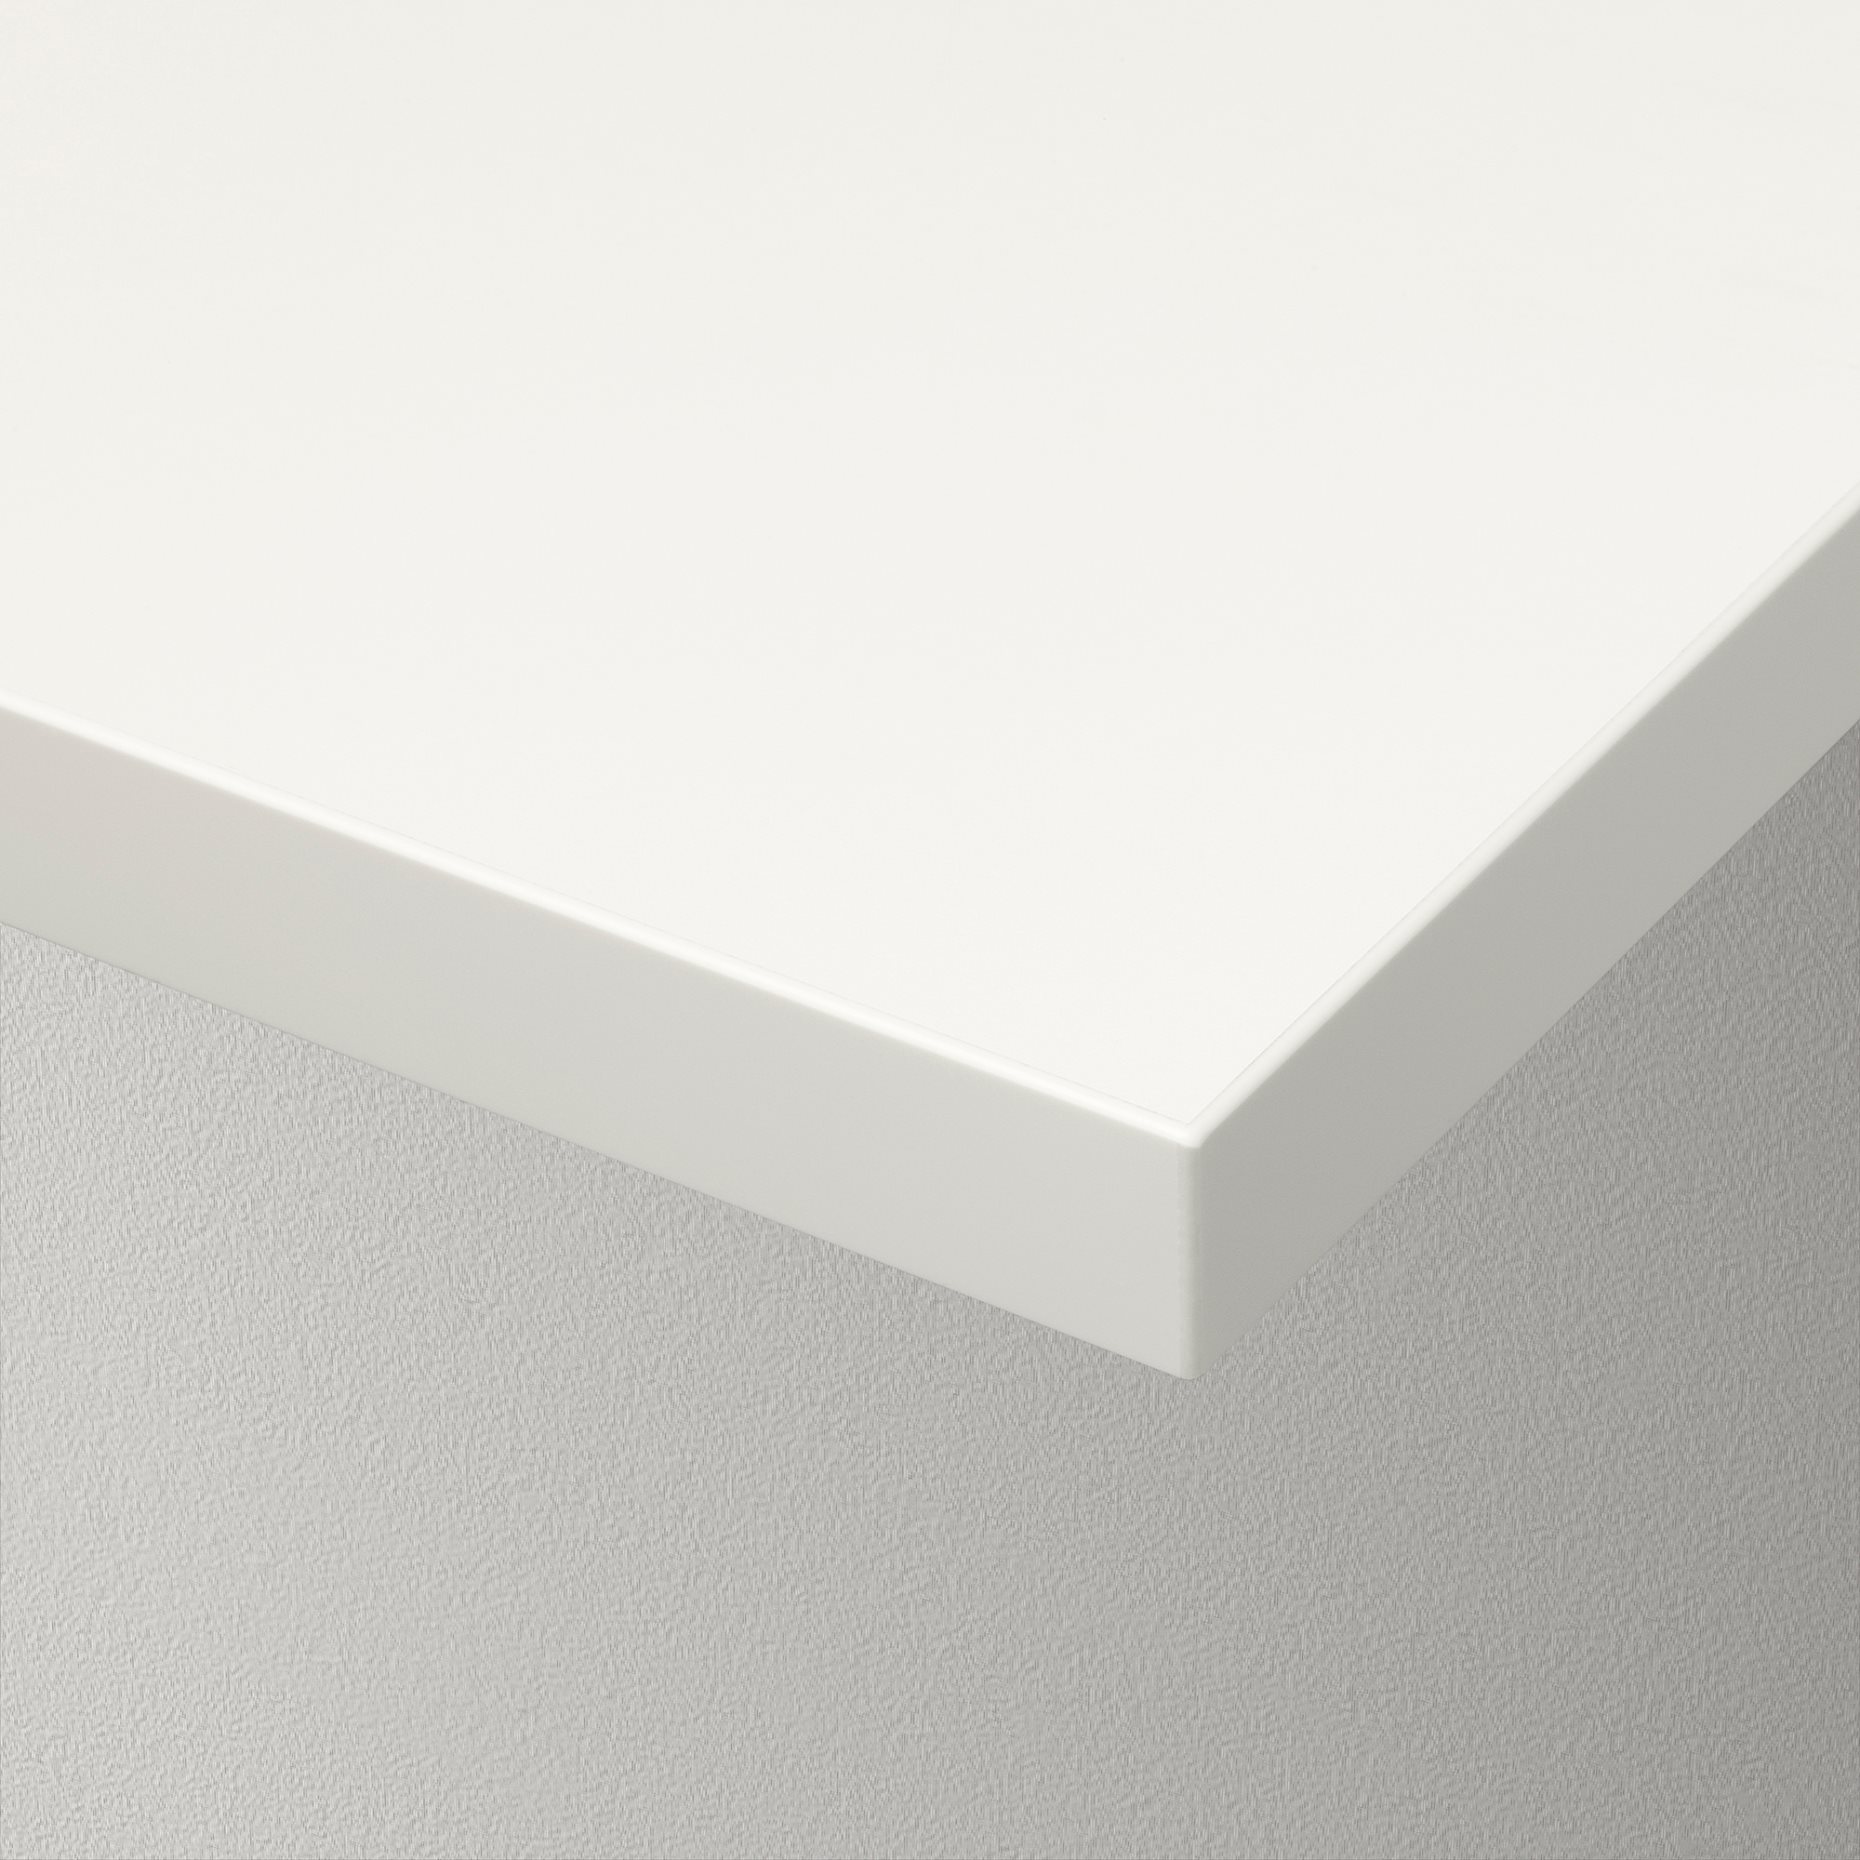 BERGSHULT/GRANHULT, wall shelf combination, 160x30 cm, 492.910.69